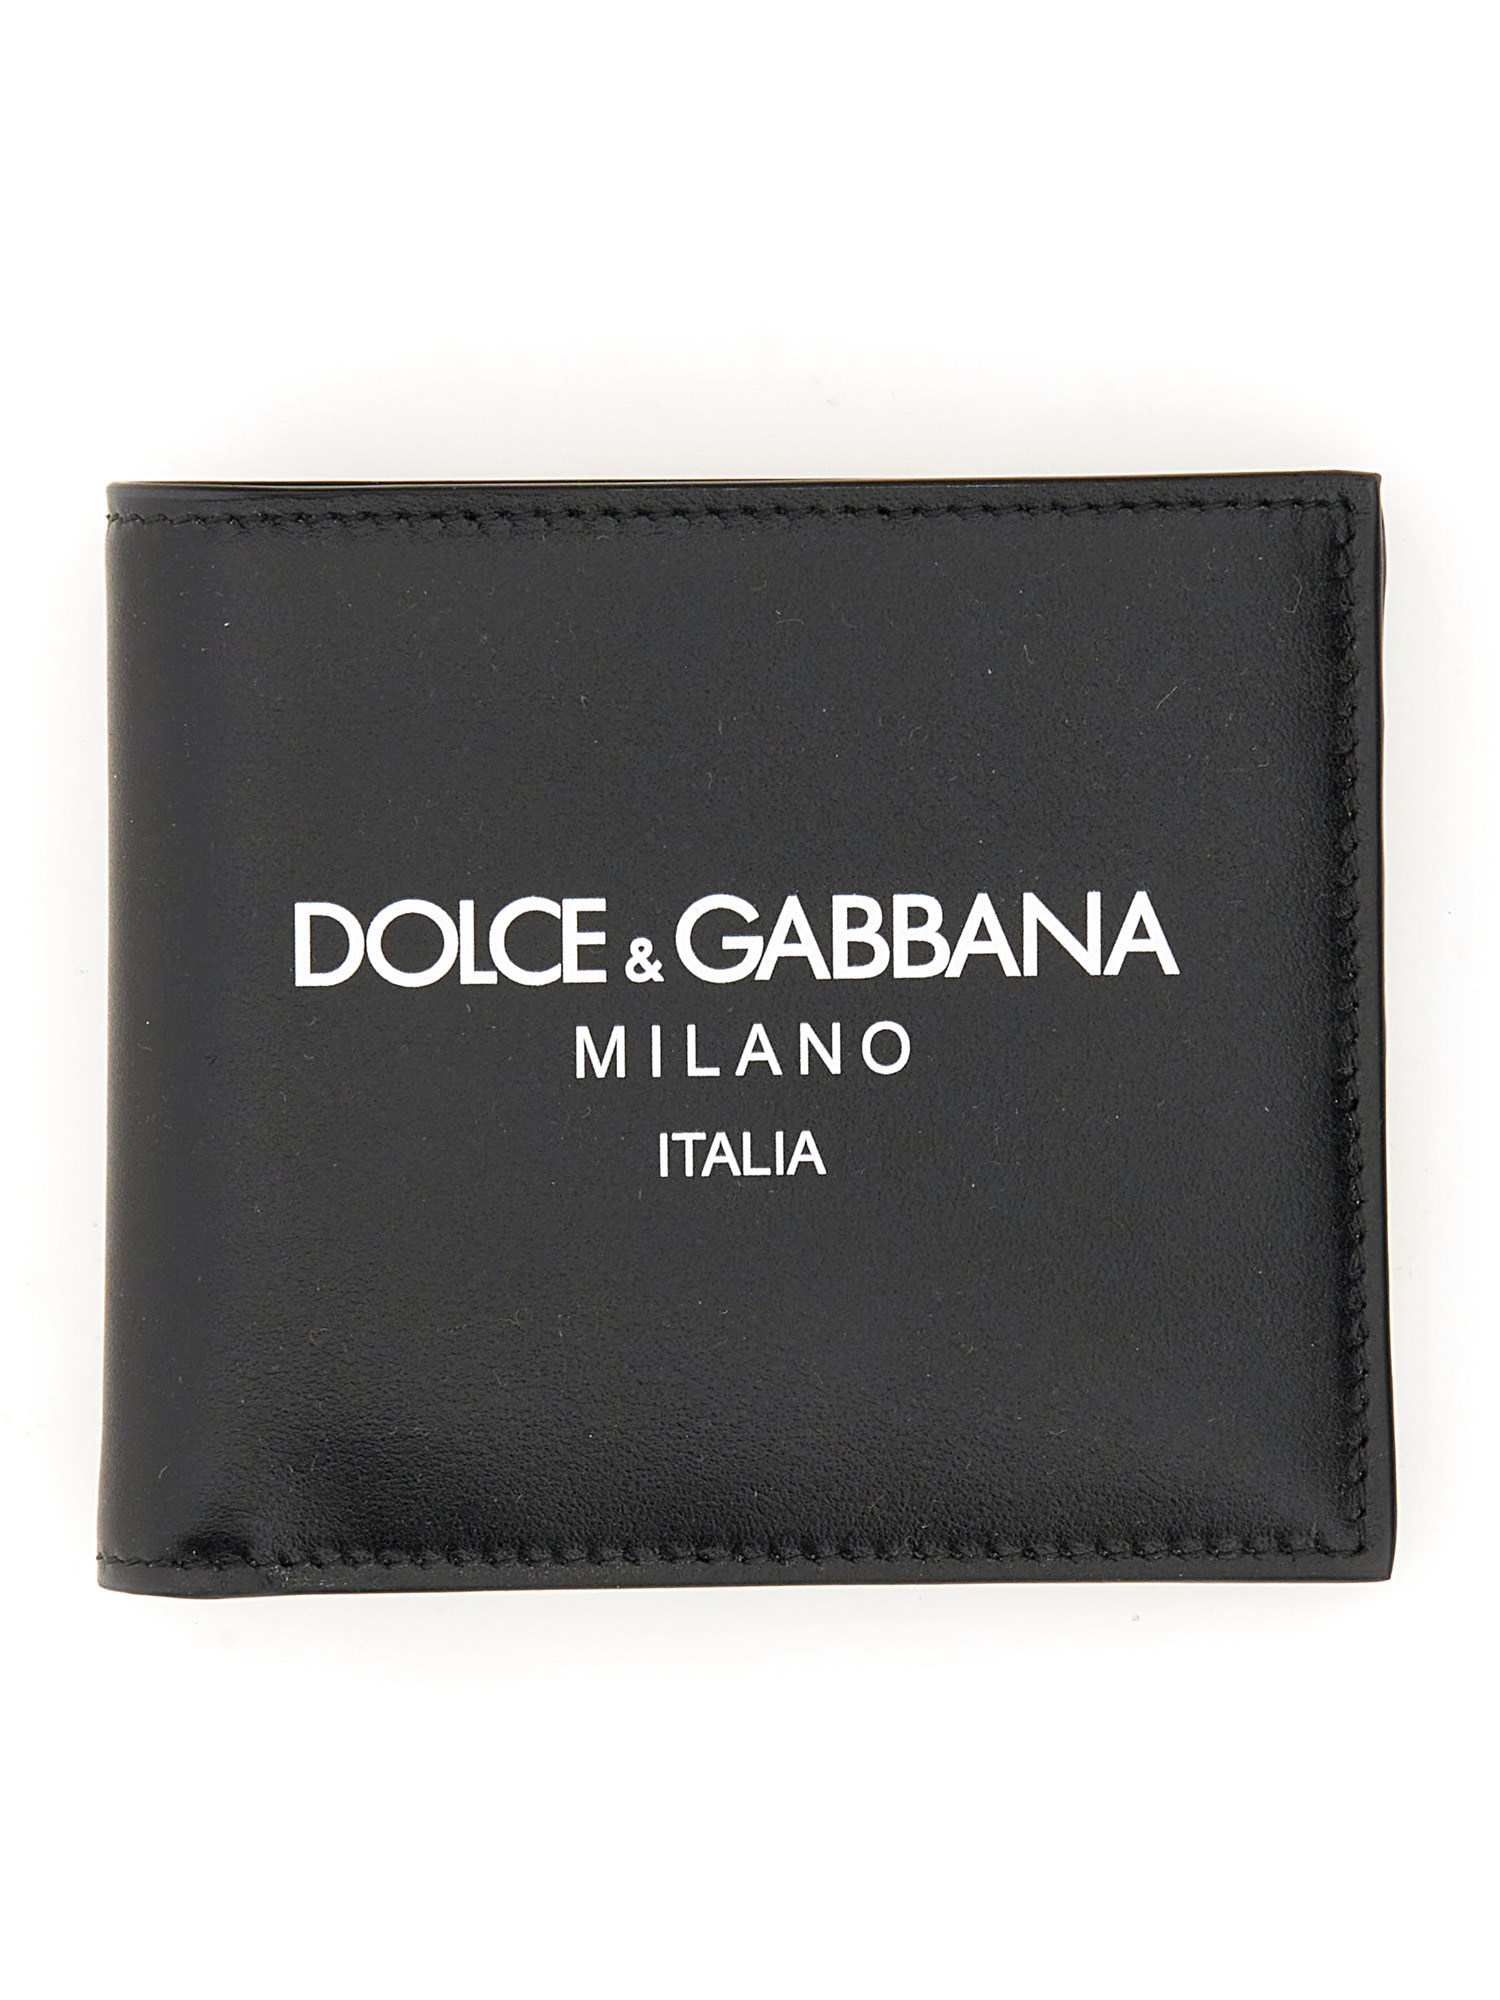 dolce & gabbana bifold wallet